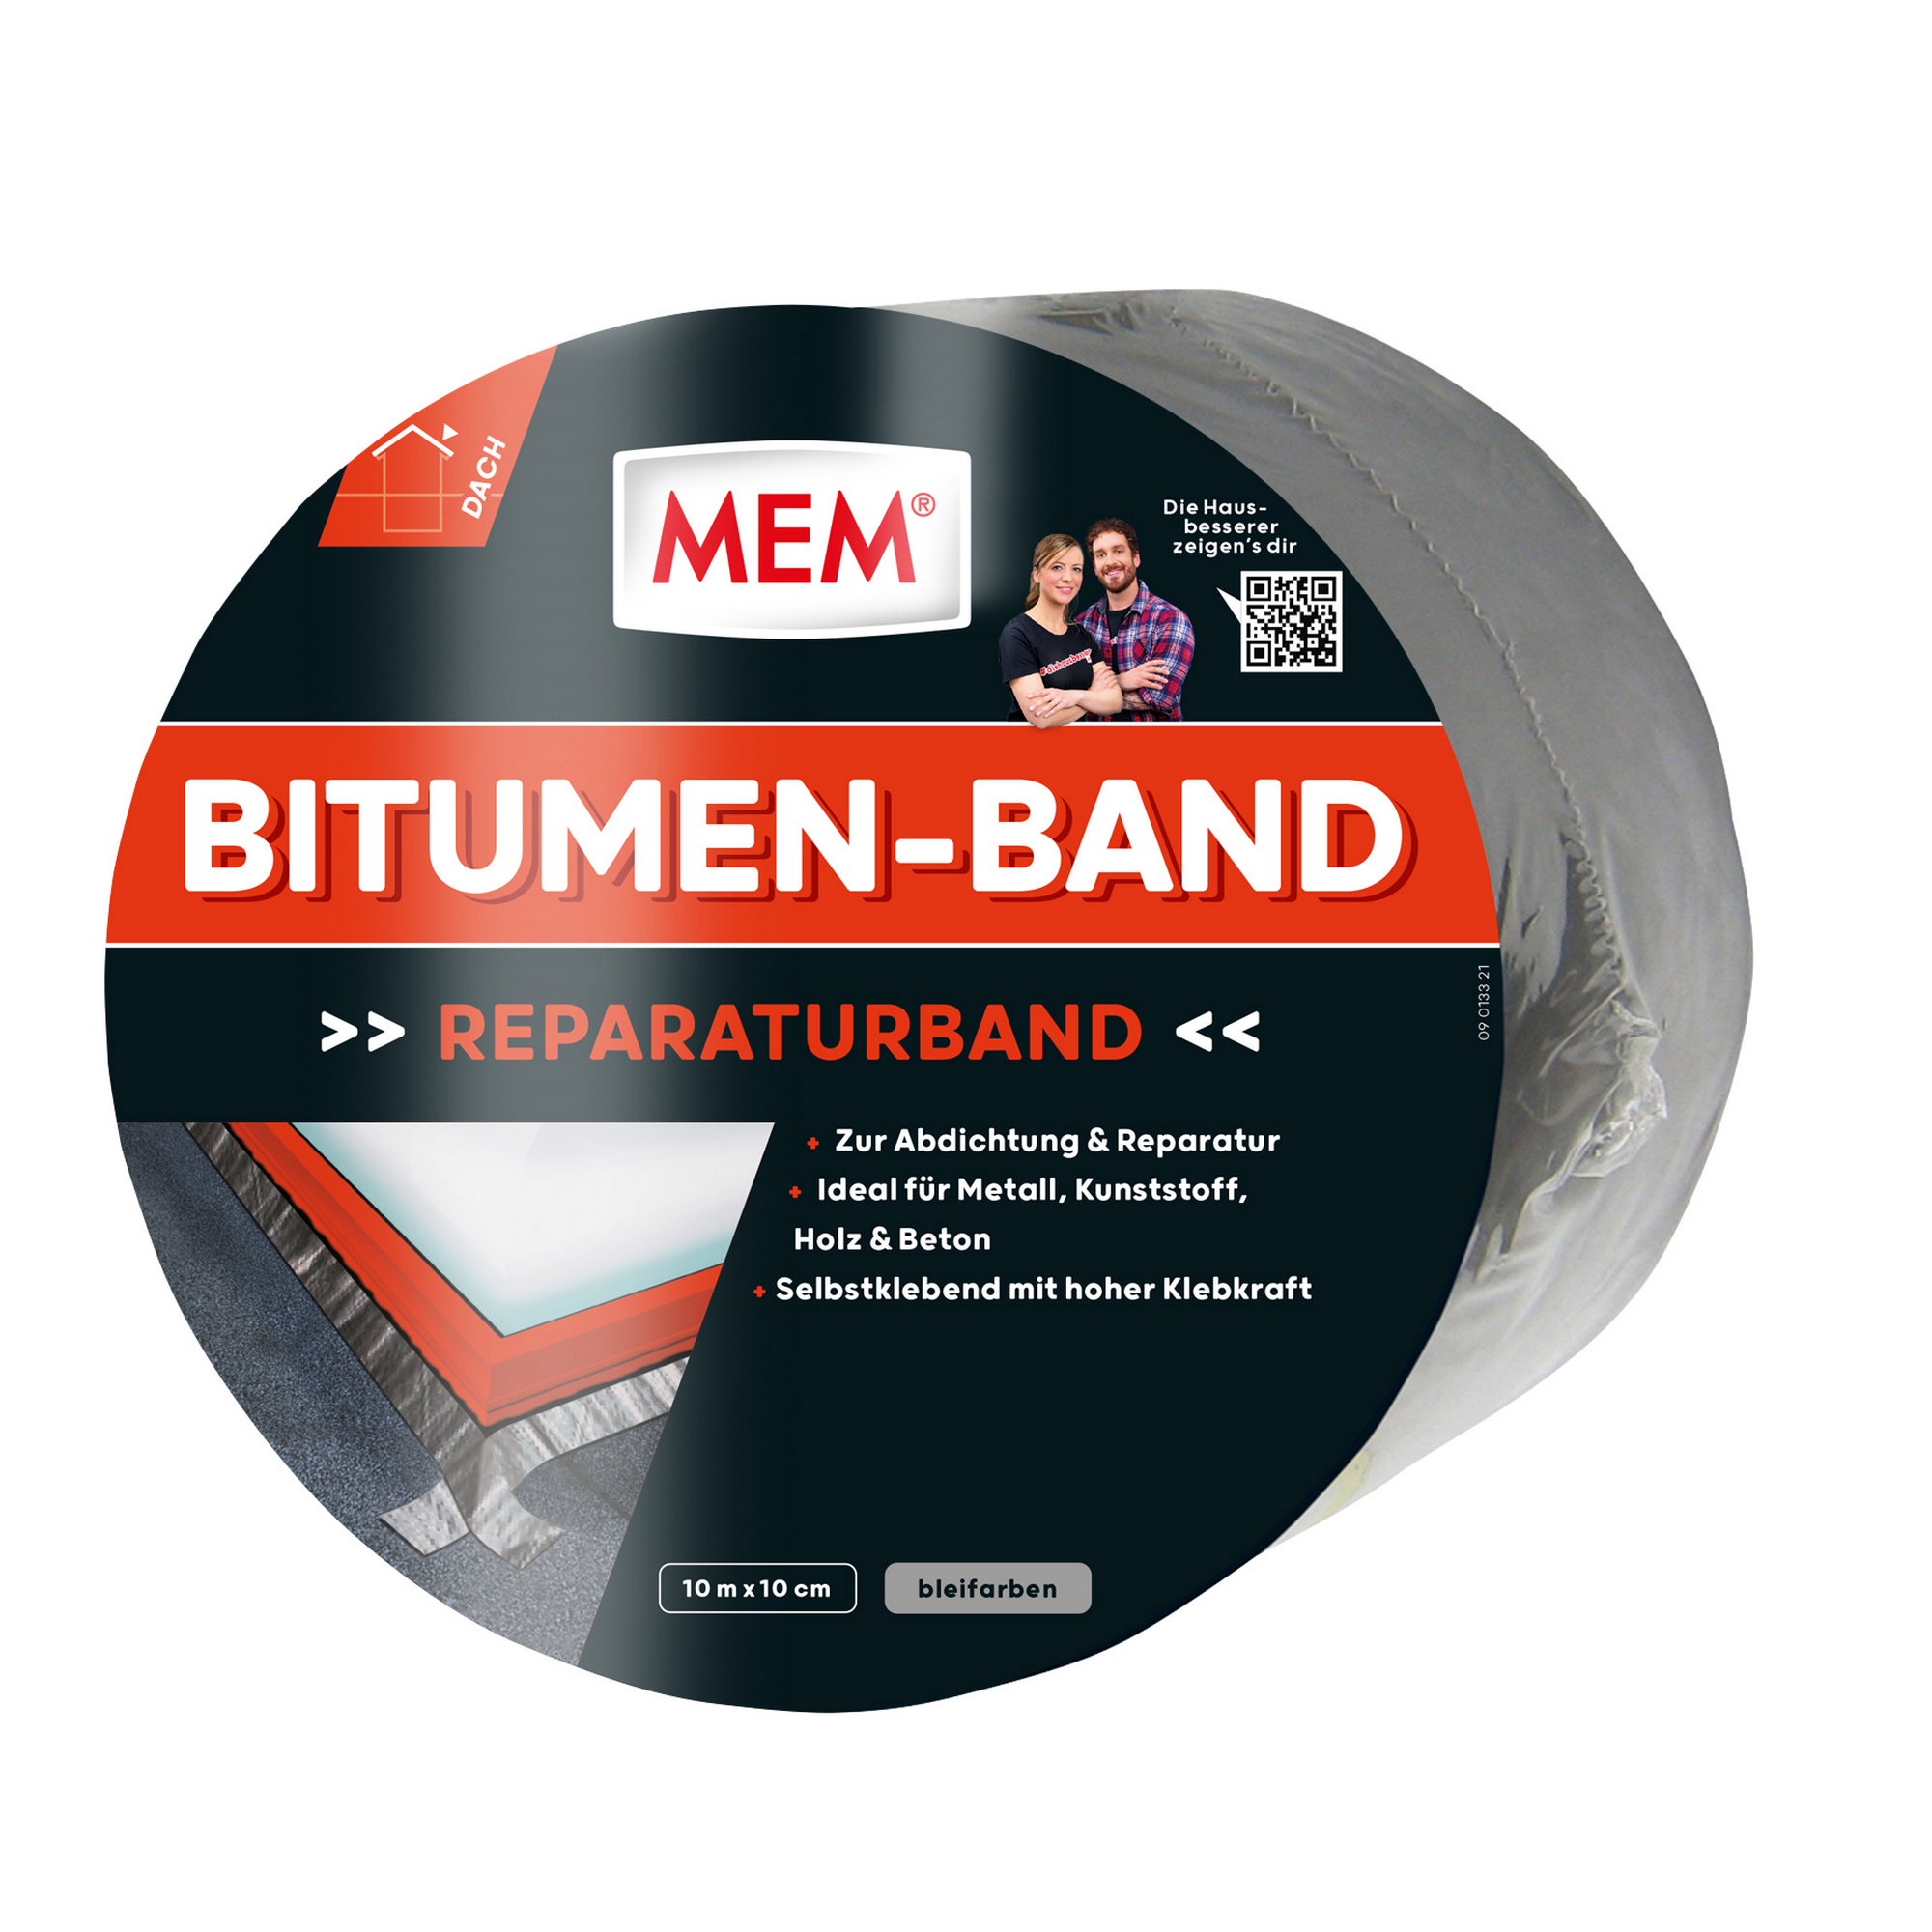 Bitumen-Band blei 10 cm x 10 m + product video